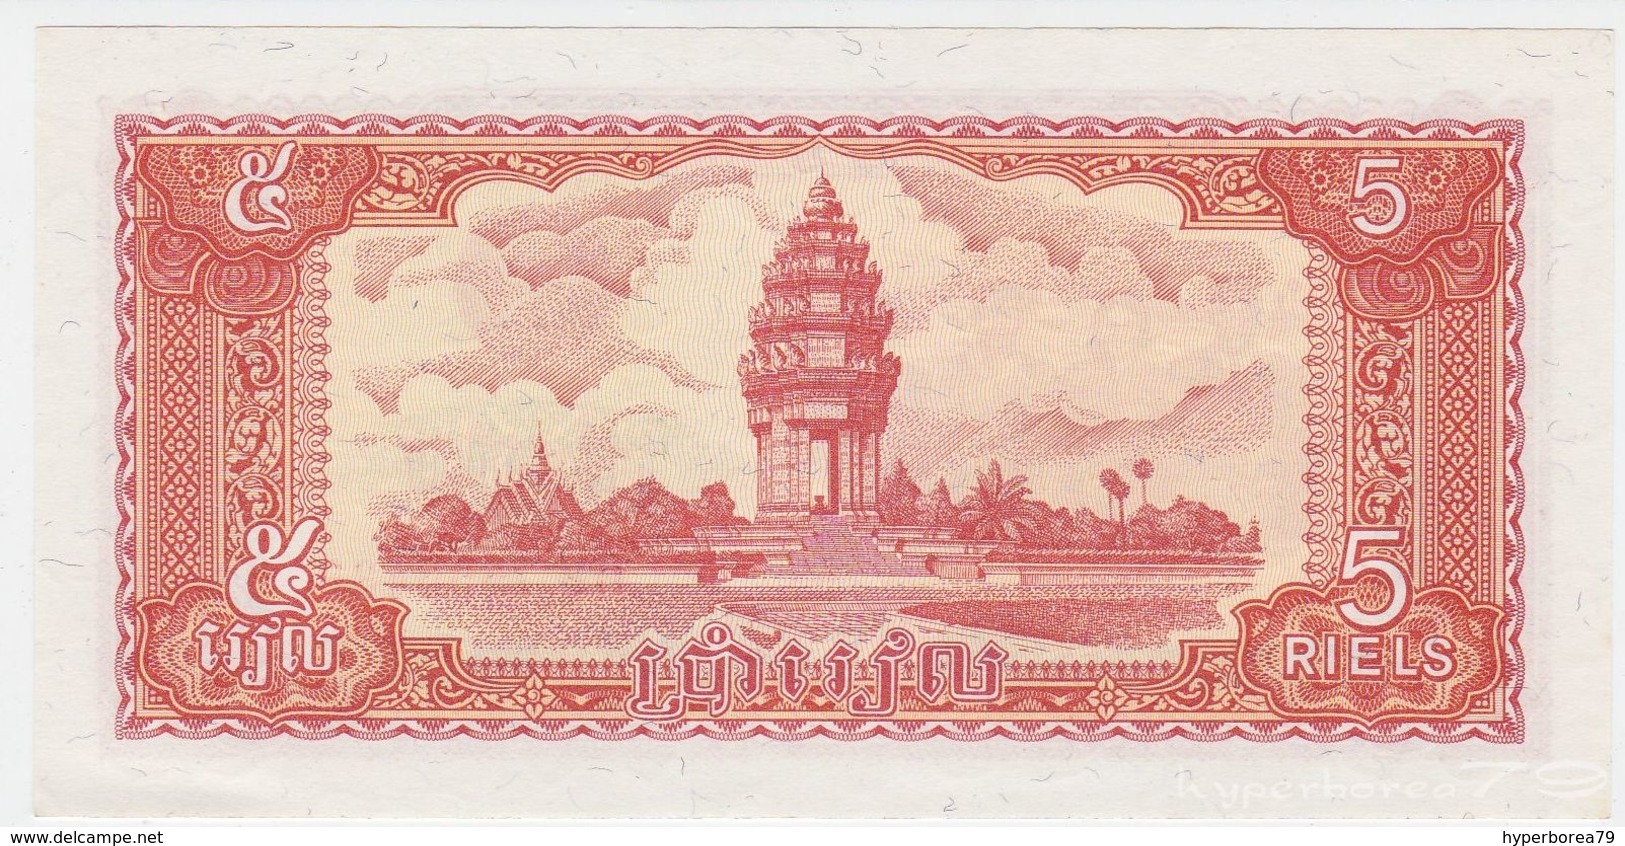 Cambodia P 33 - 5 Riels 1987 - UNC - Cambogia